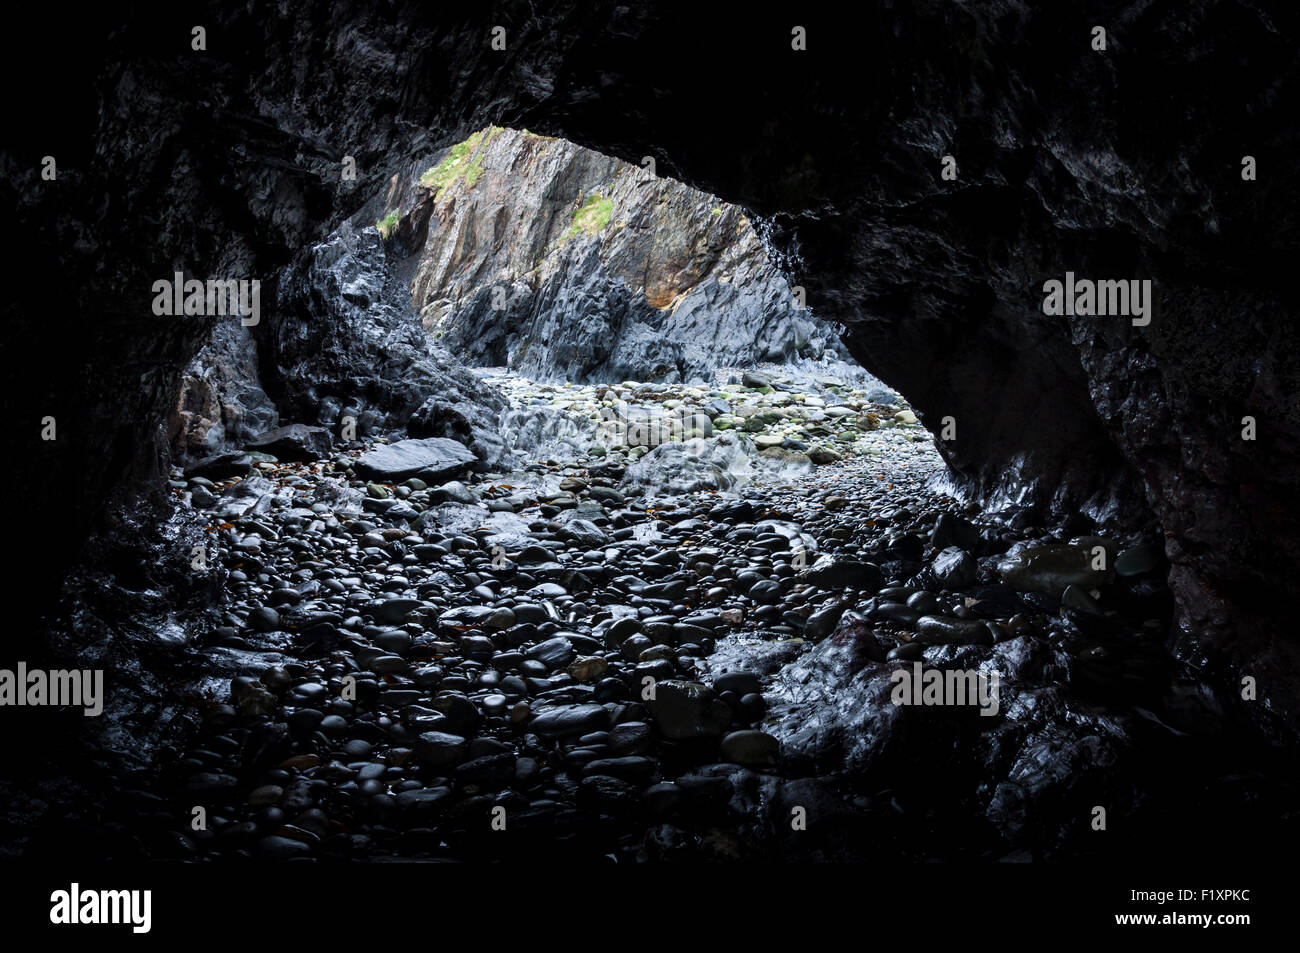 Dunkle Höhle am Strand von Trefin in Pembrokeshire, Wales. Stockfoto